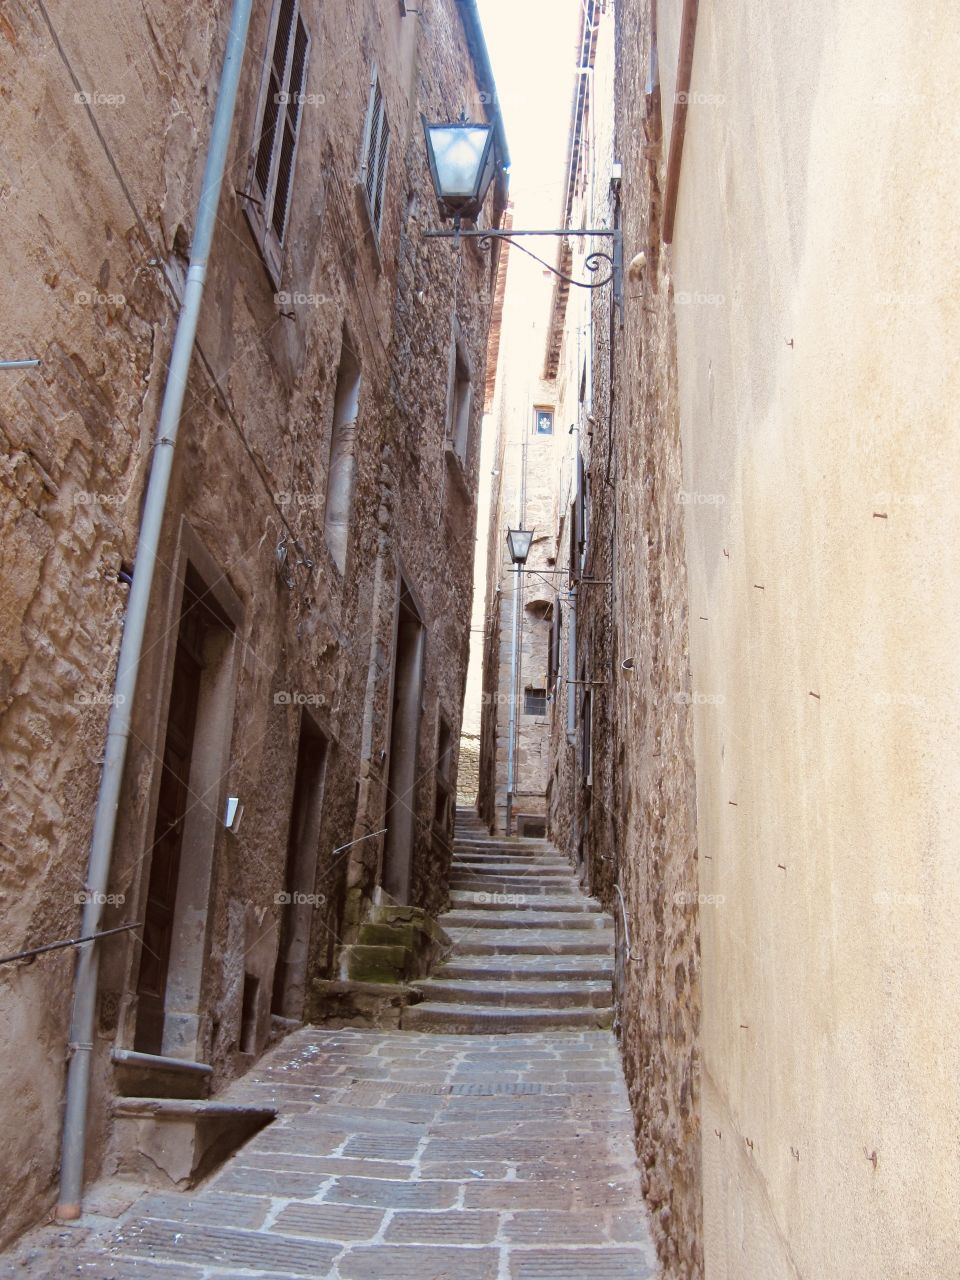 Narrow alleyway between ancient buildings brown stone architecture 